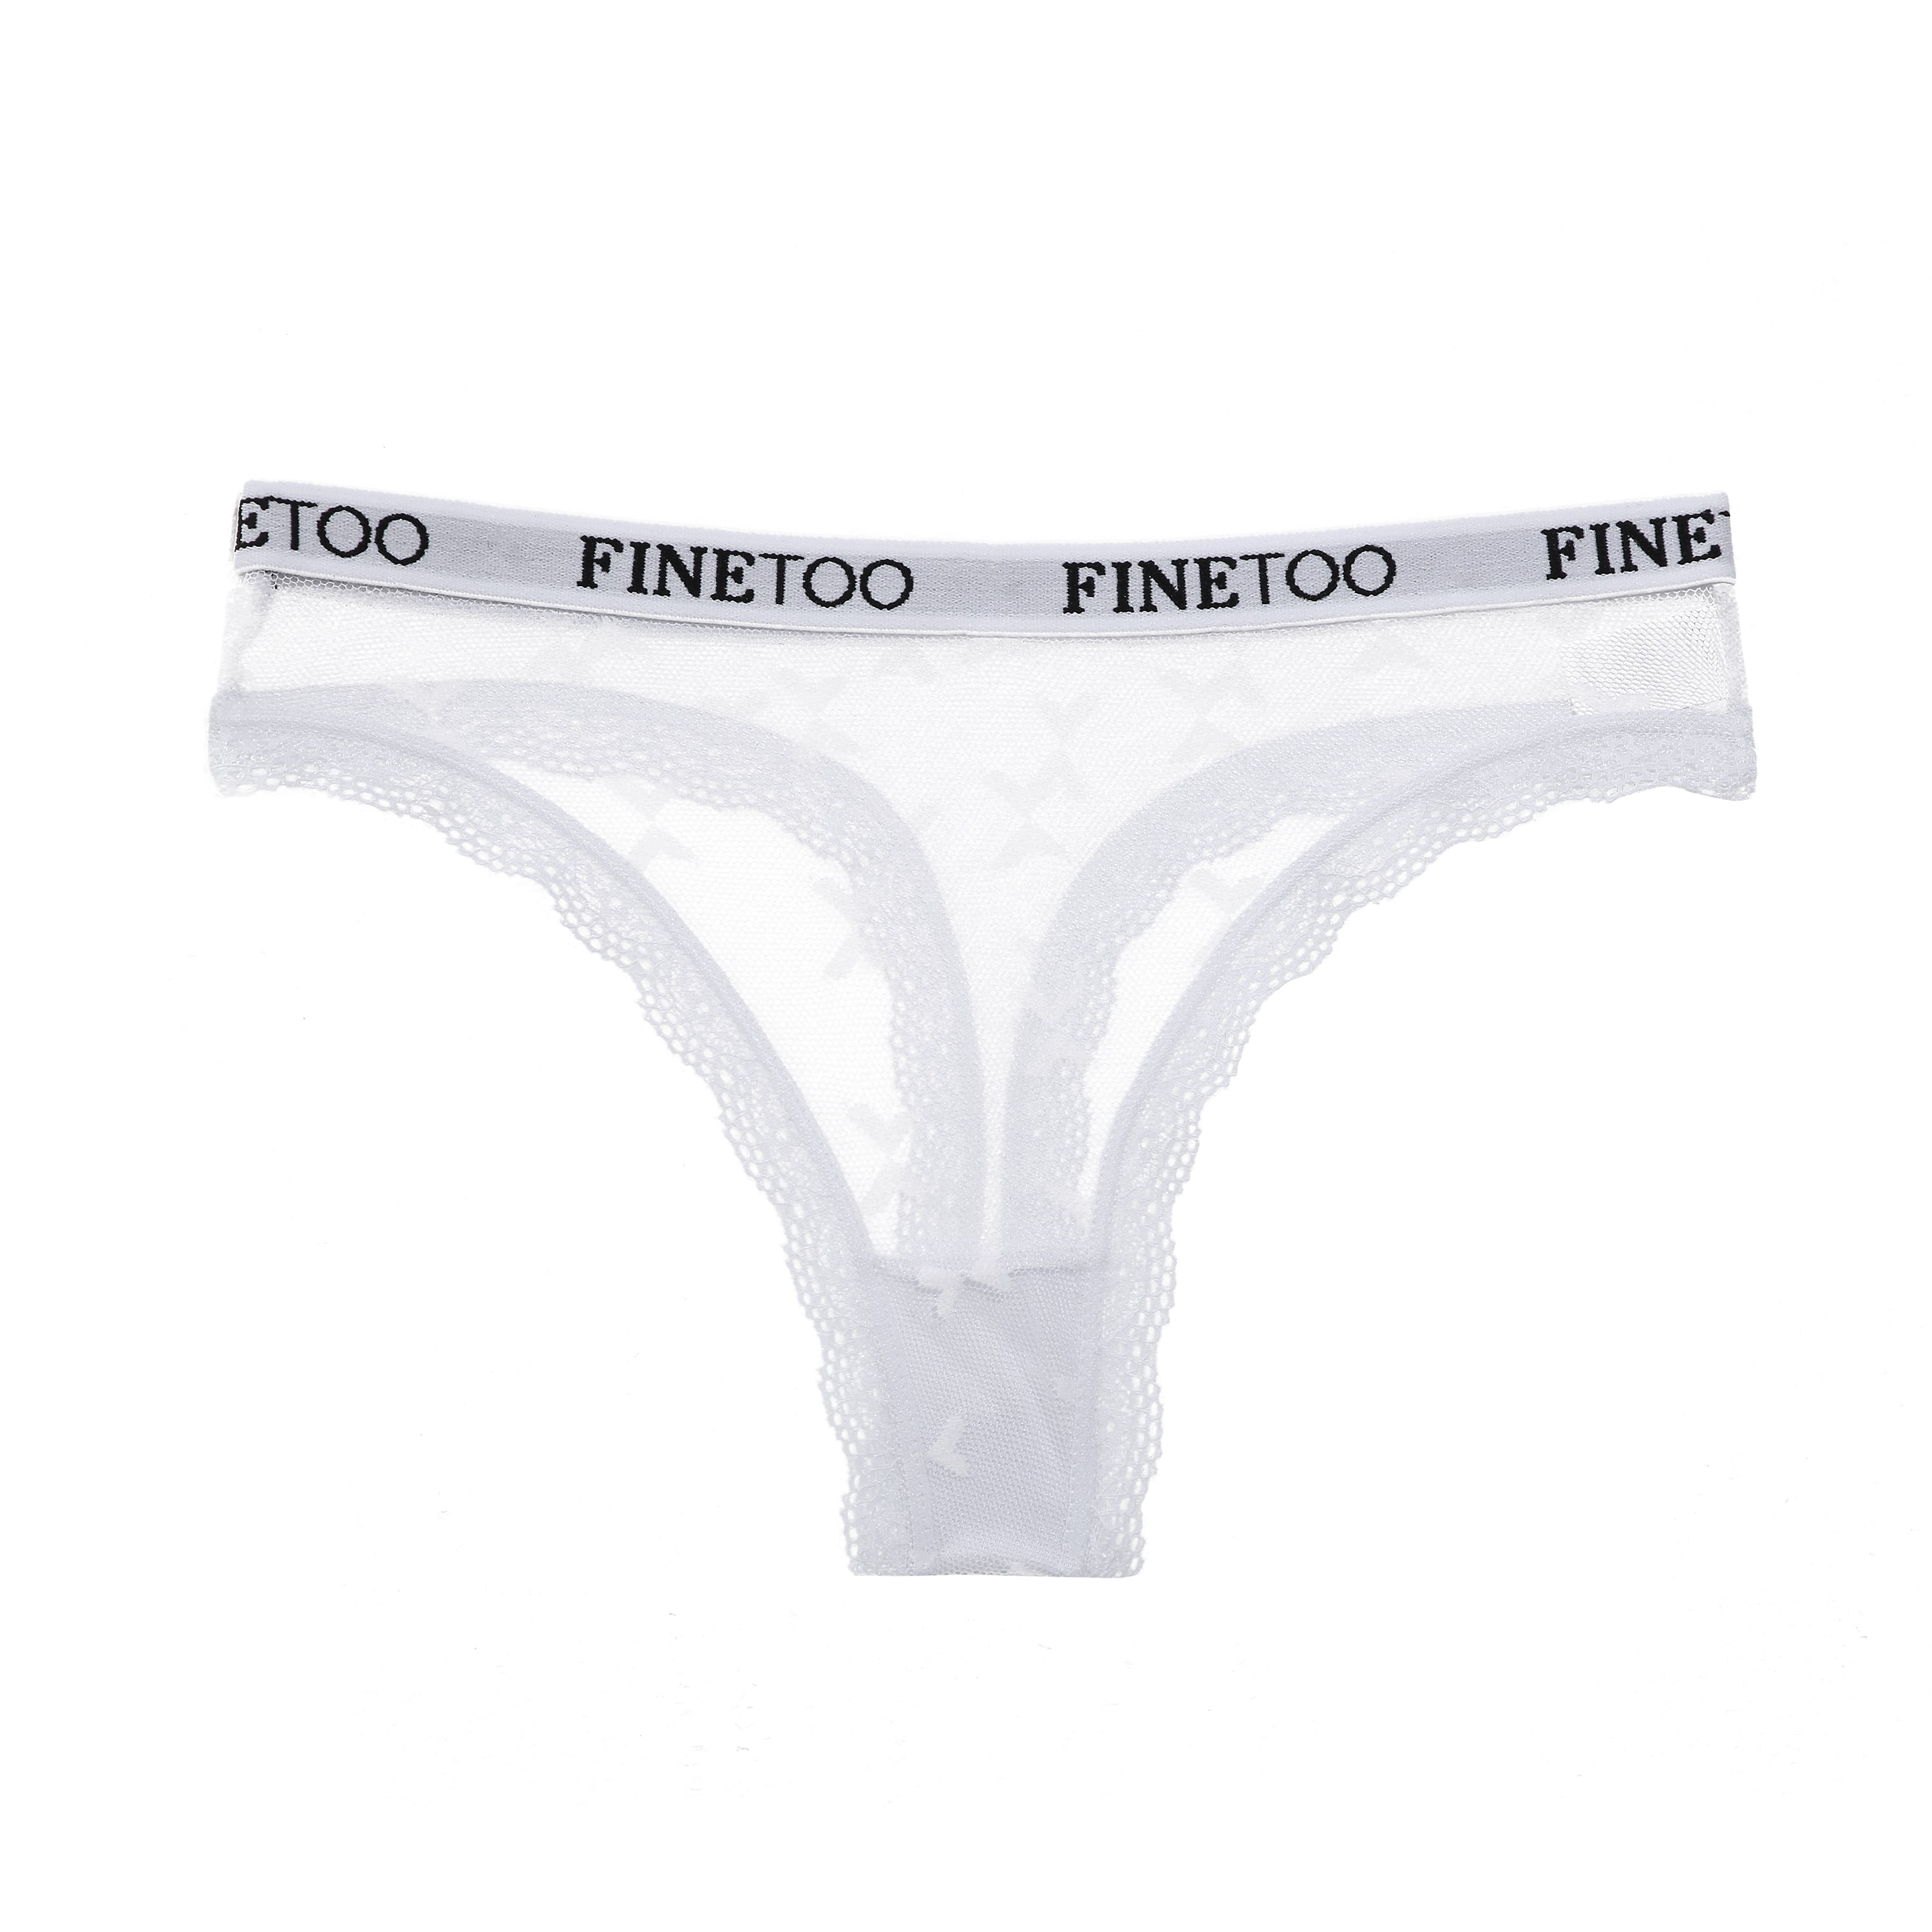  FINETOO 10 Pack Womens Underwear Cotton Cute Low